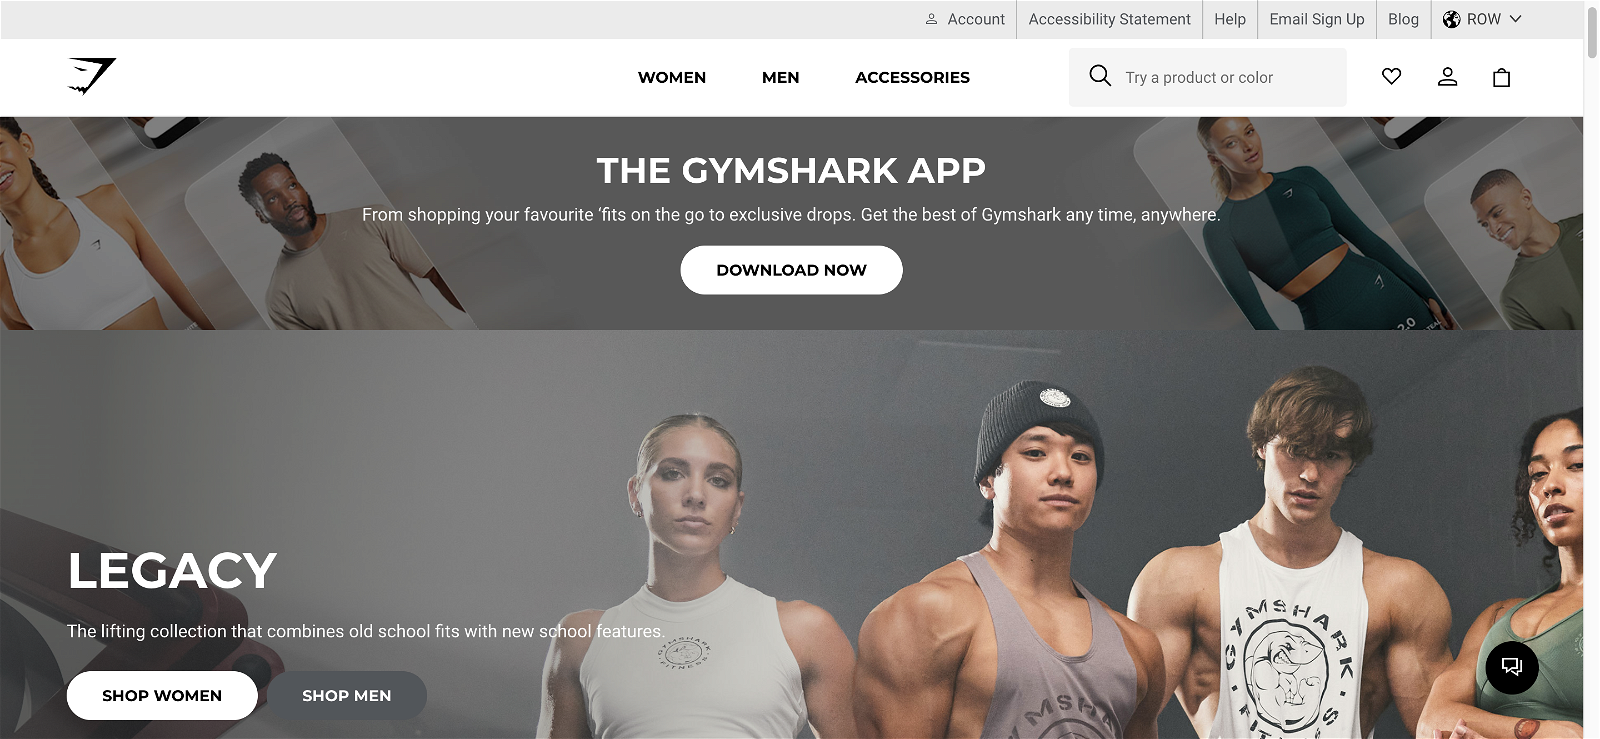 Gymshark.com